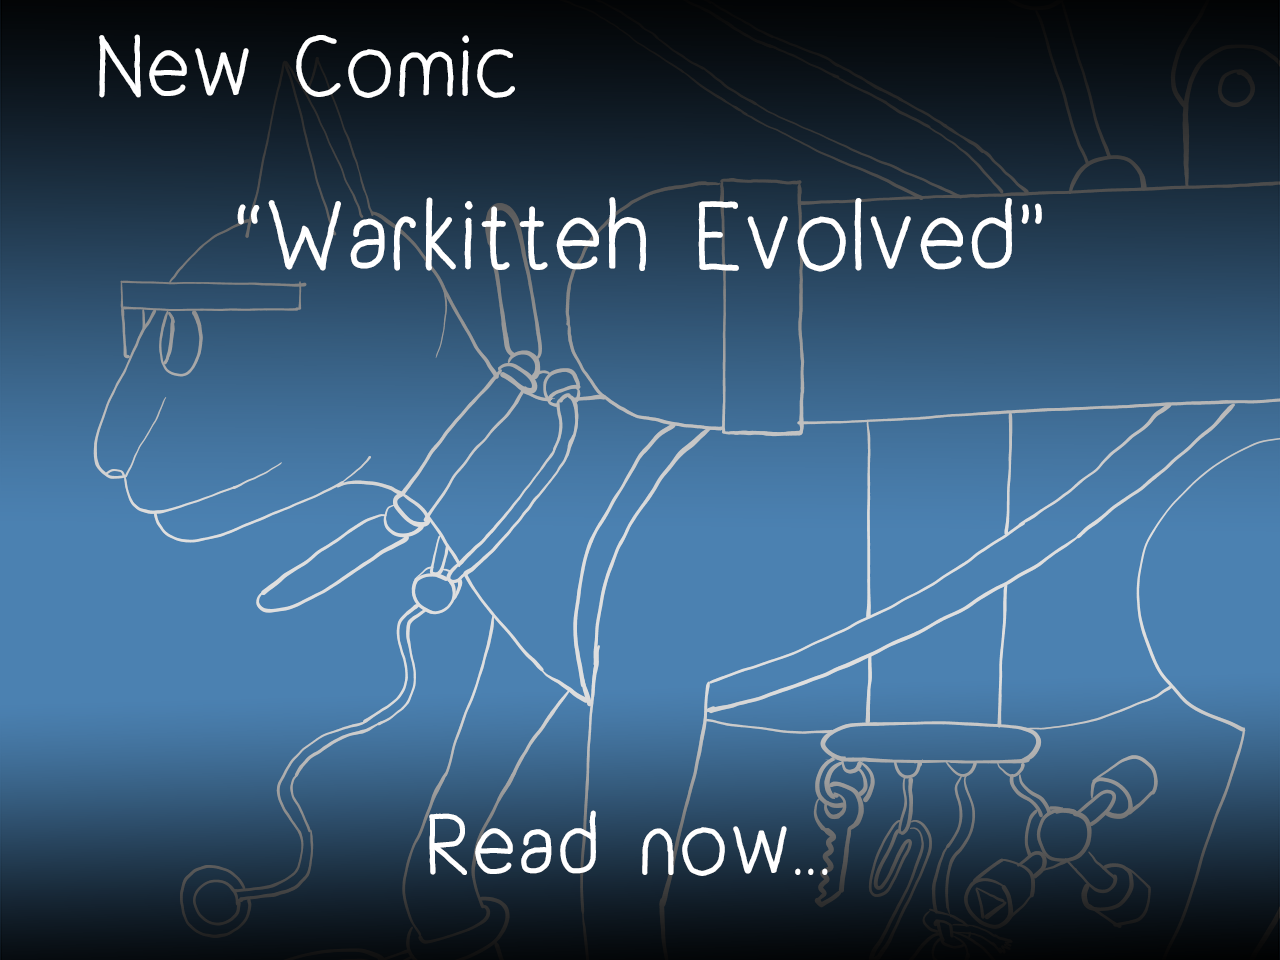 Warkitteh Evolved